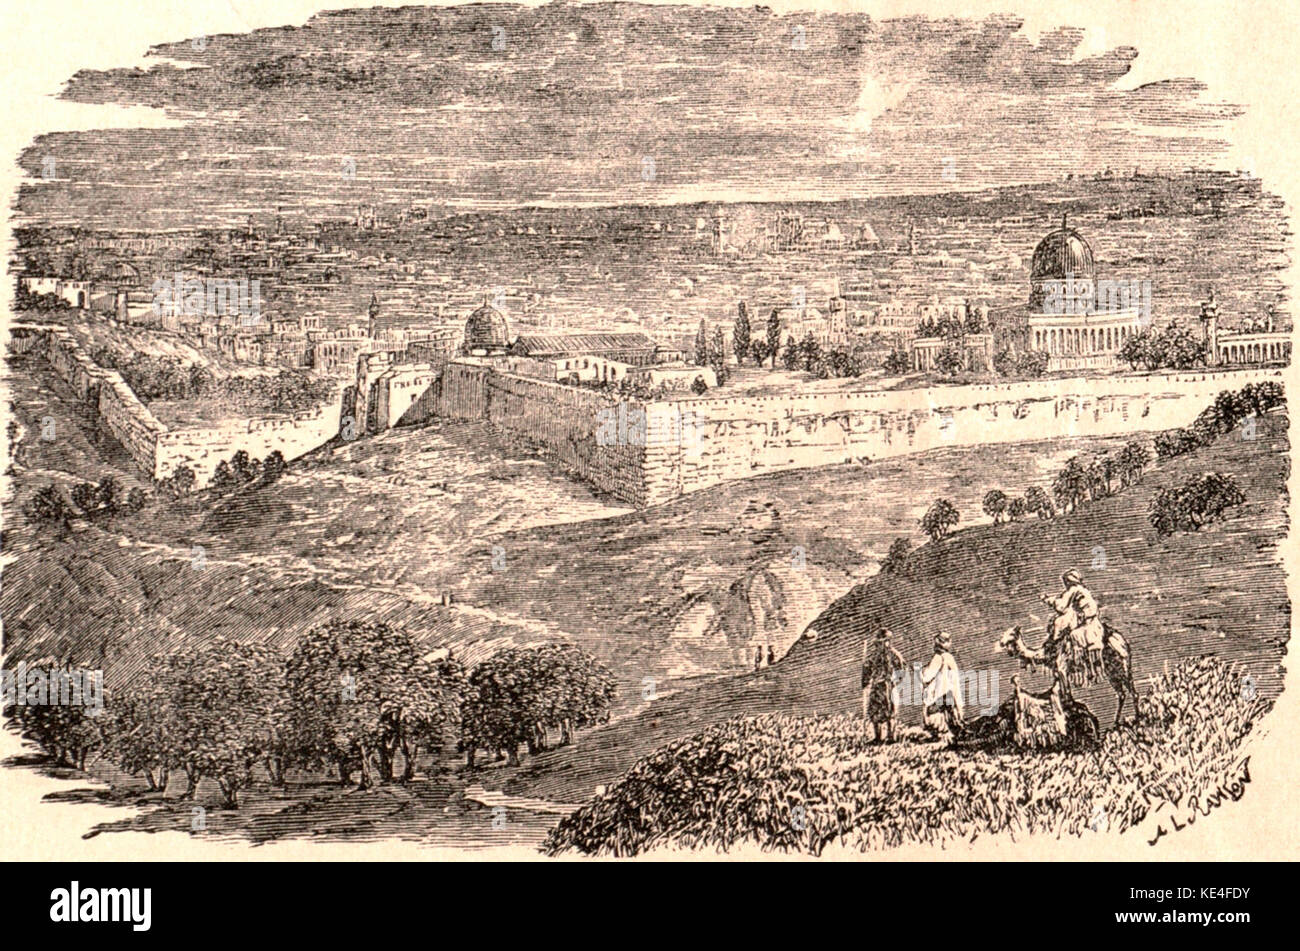 View of Jerusalem. Rawson, A.L. Map of Palestine and all Bible lands. 1873 Stock Photo